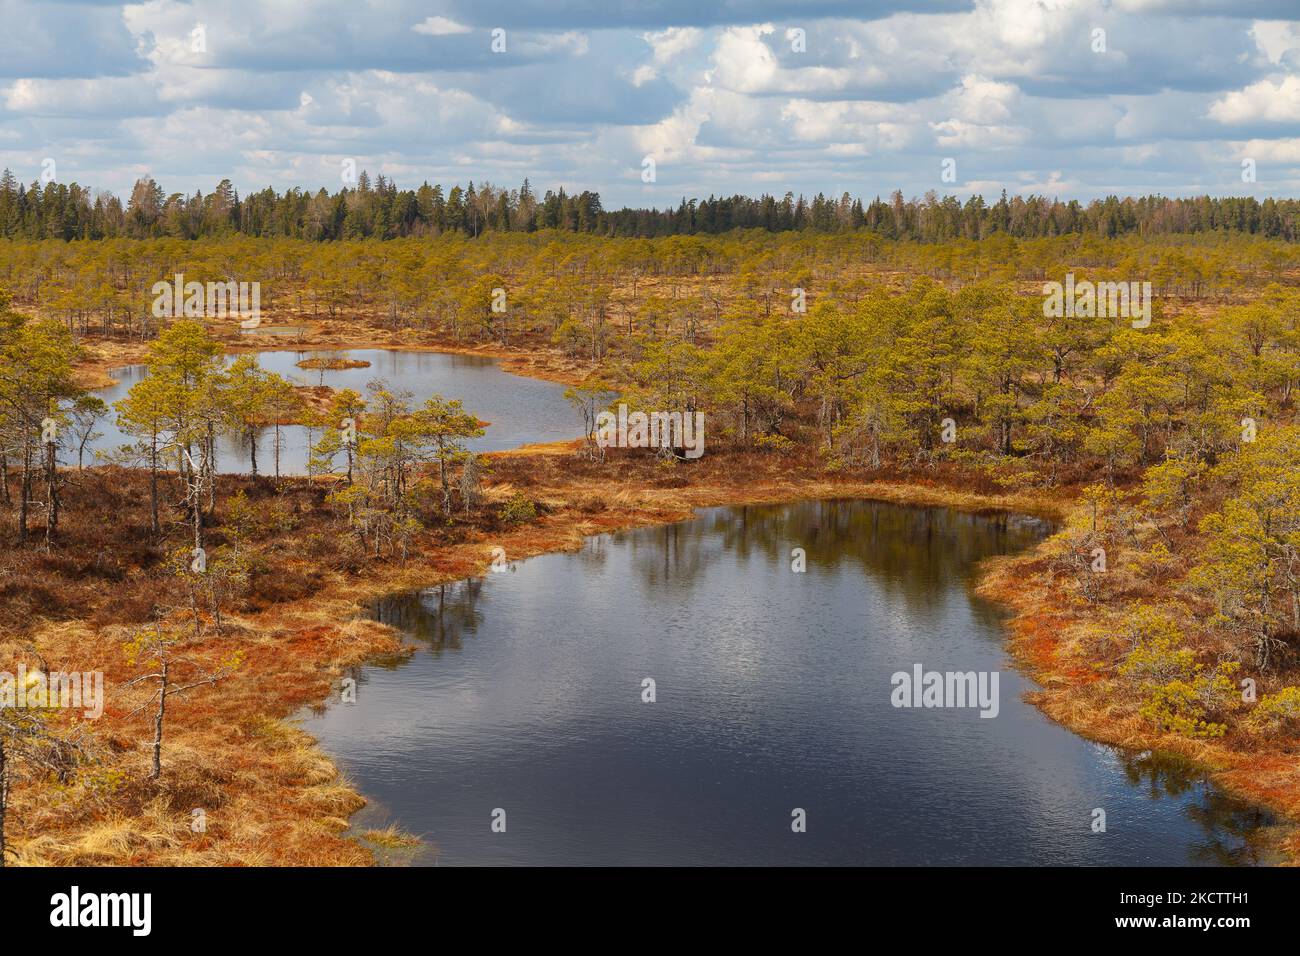 Sumpf mit Seen, Moor im estnischen Naturschutzgebiet. Stockfoto